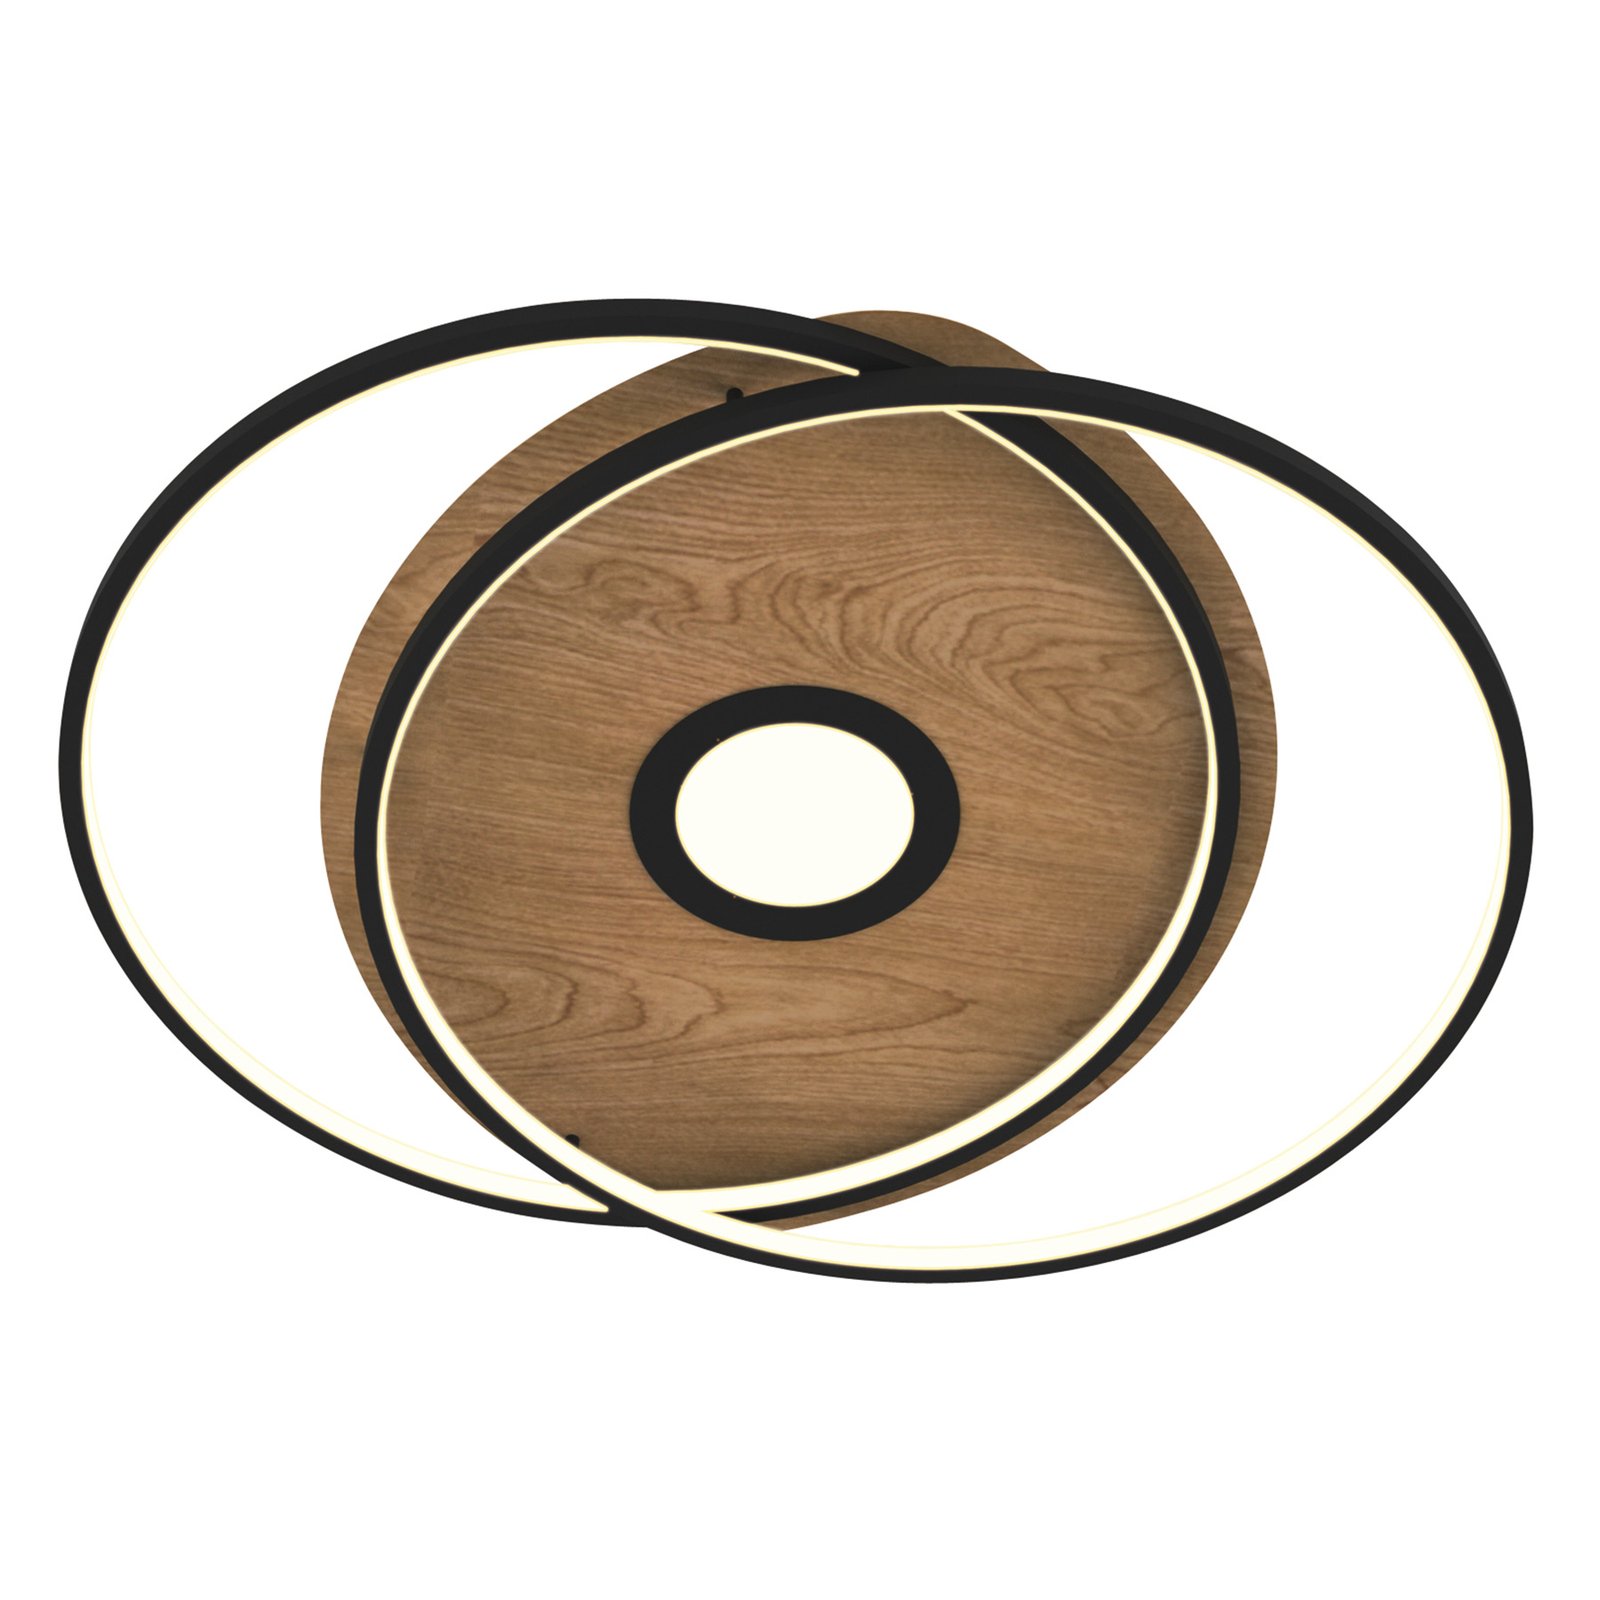 Paul Neuhaus Q-AMIRA LED plafondlamp ovaal, bruin